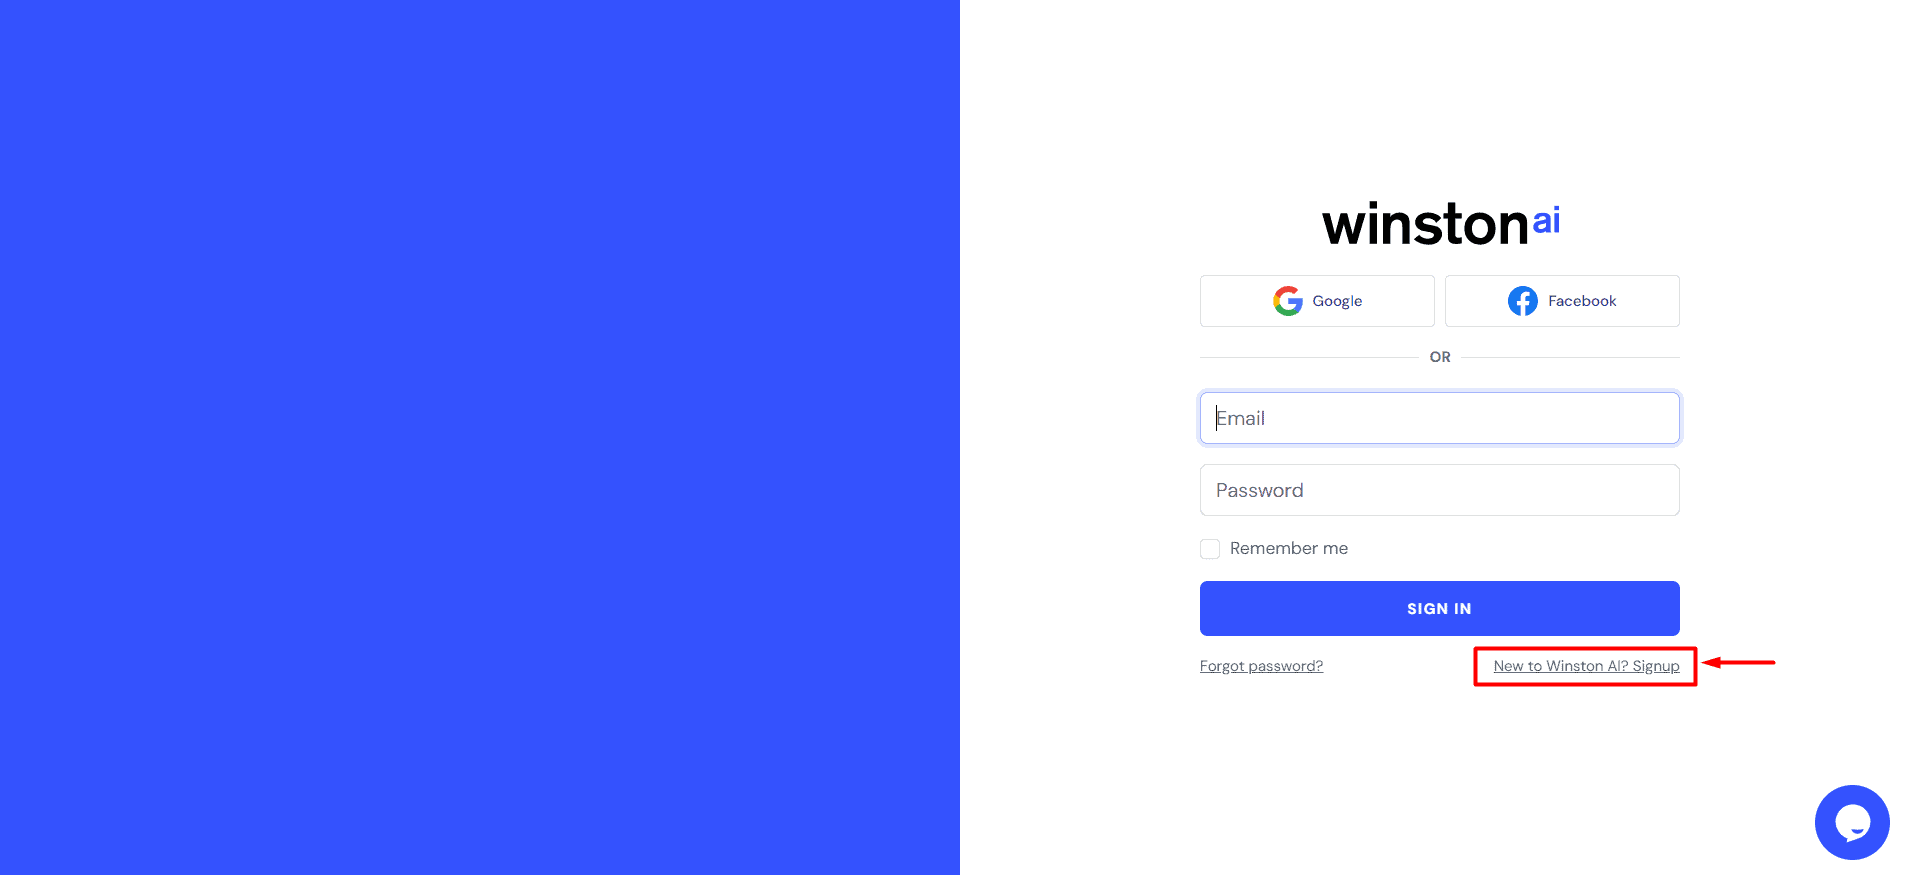 Winston AI home page